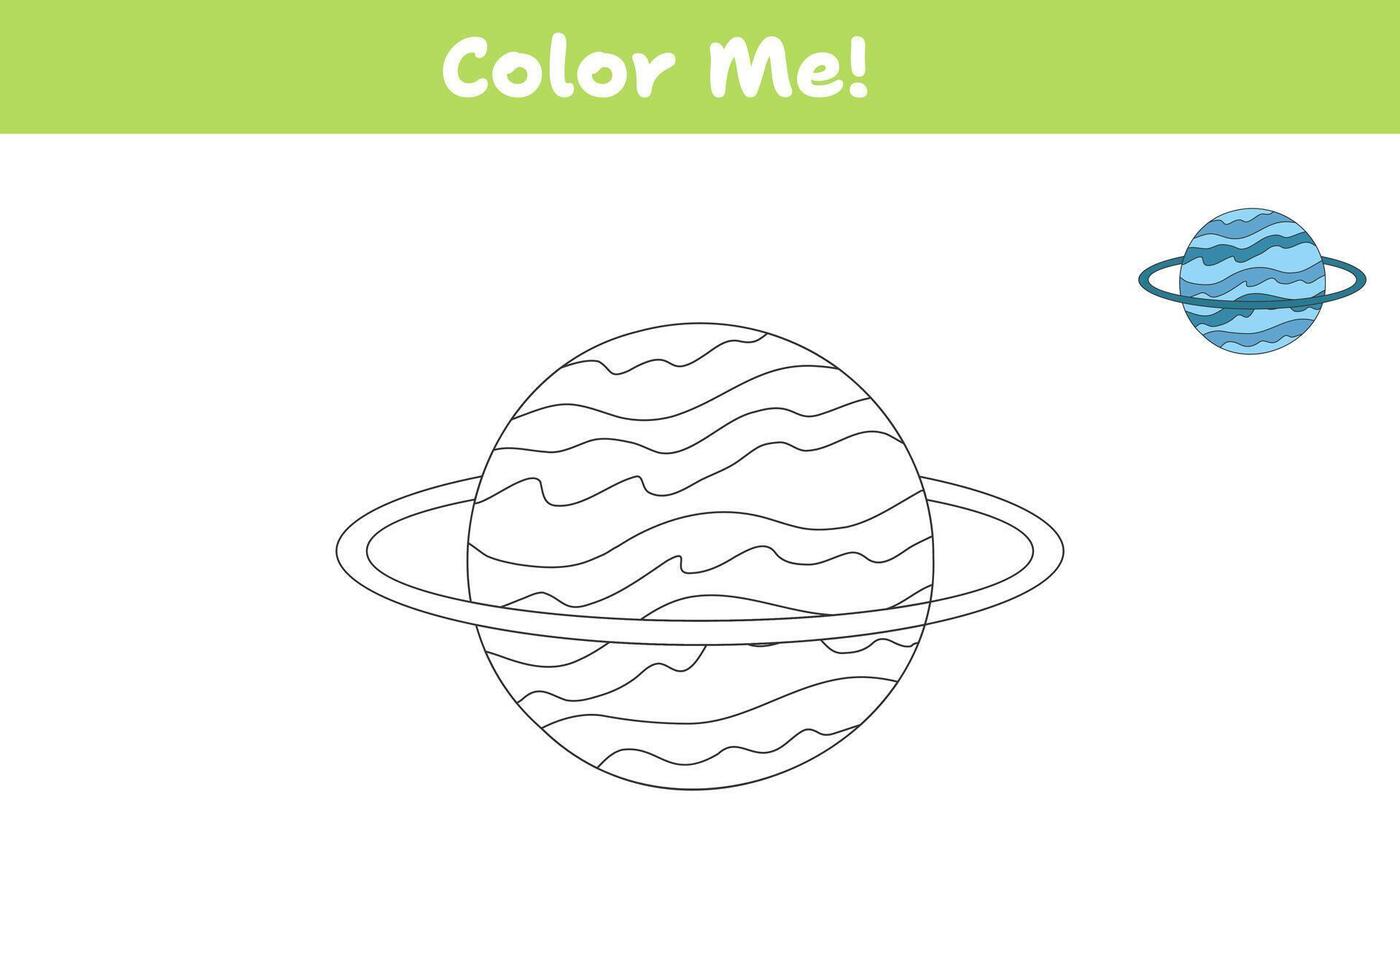 Color Uranus. Coloring book page for children. Vector illustration.